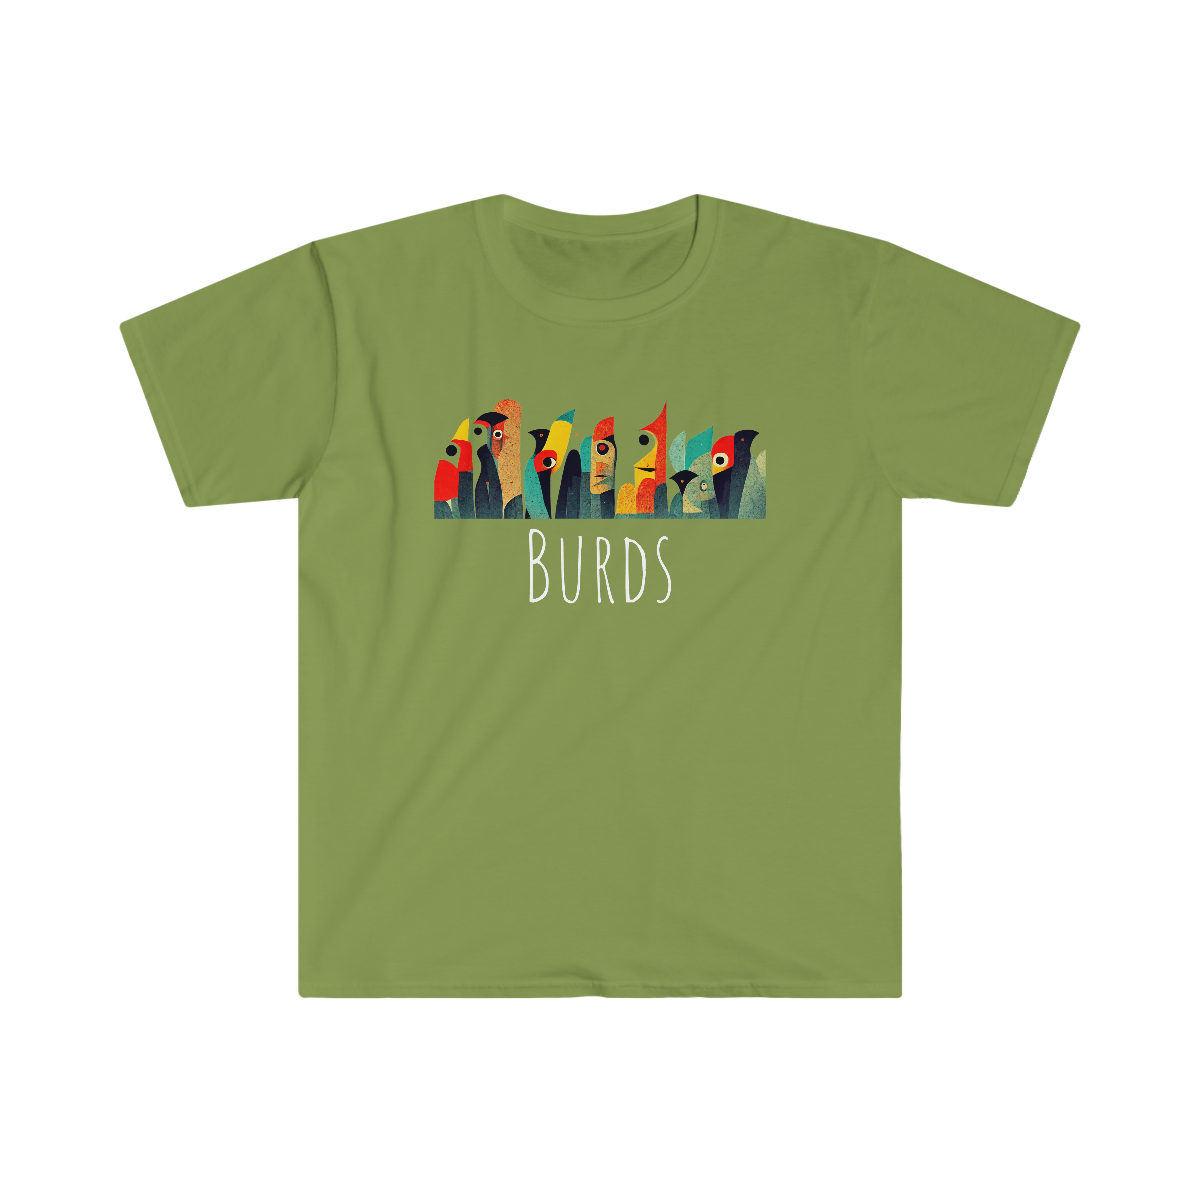 Burds - Unisex Softstyle T-Shirt